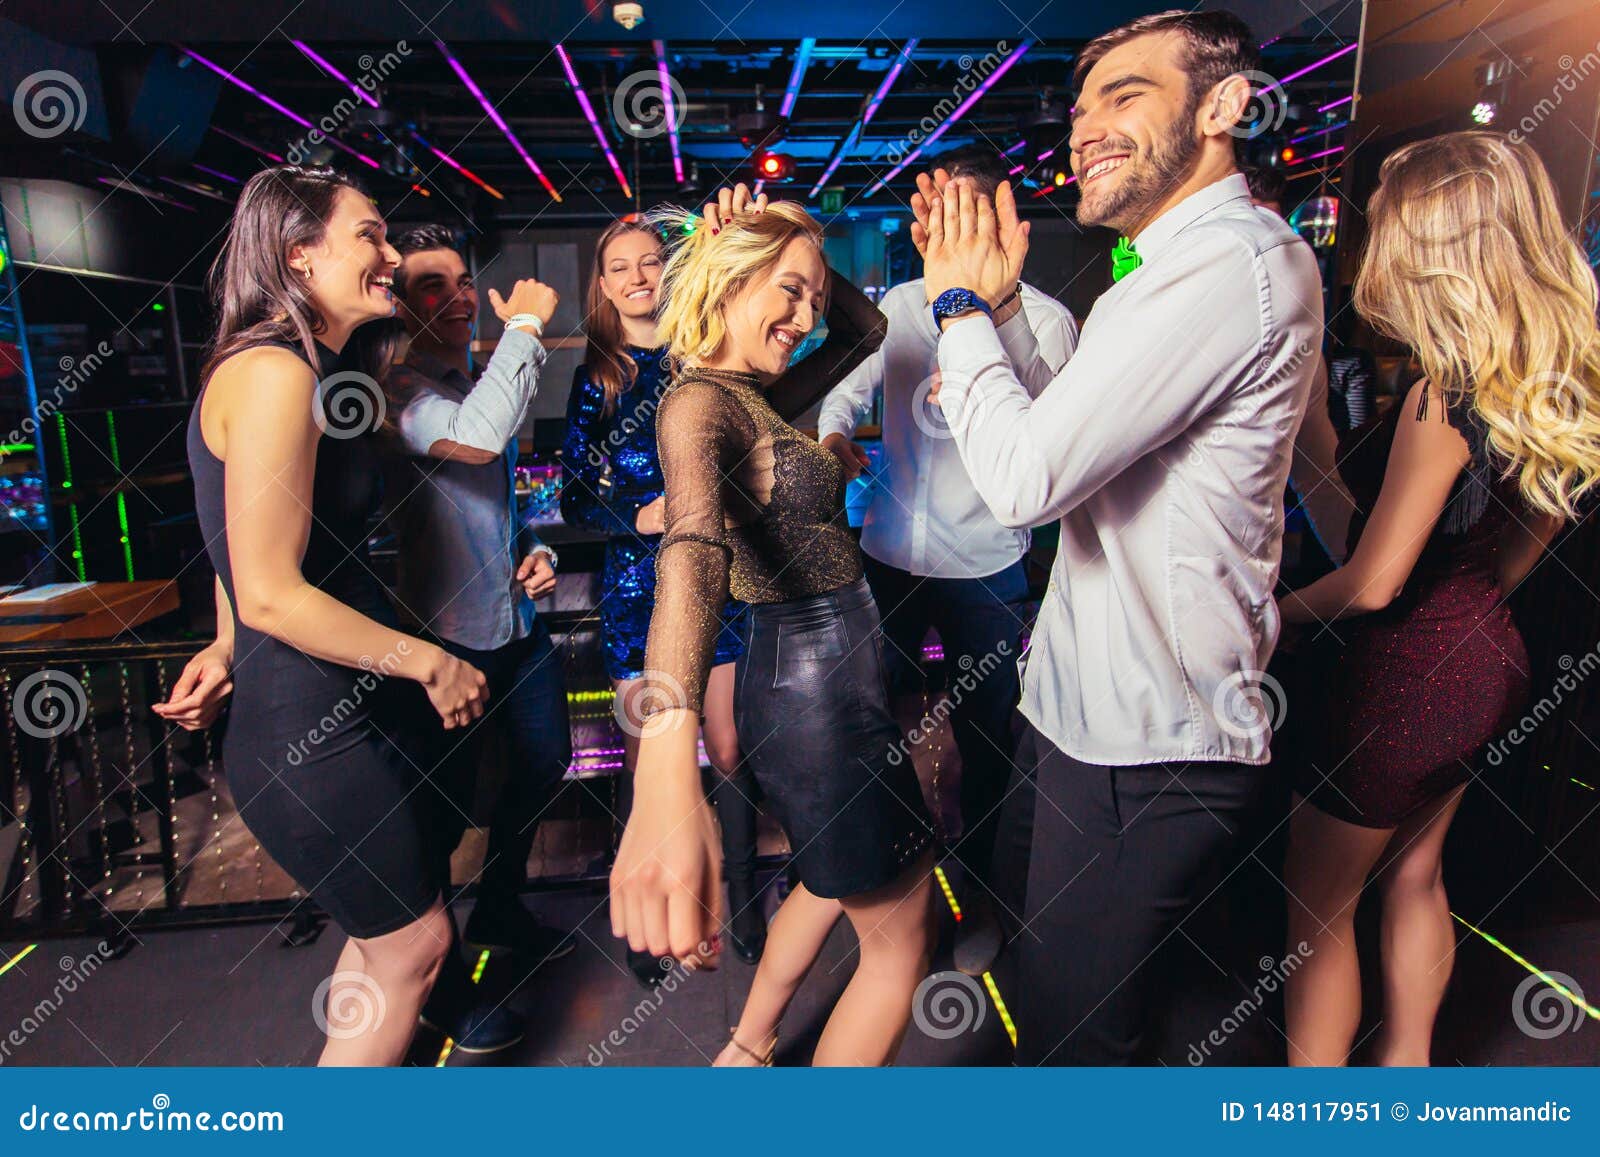 People Dancing in Night Club Stock Image - Image of indoors, energetic ...